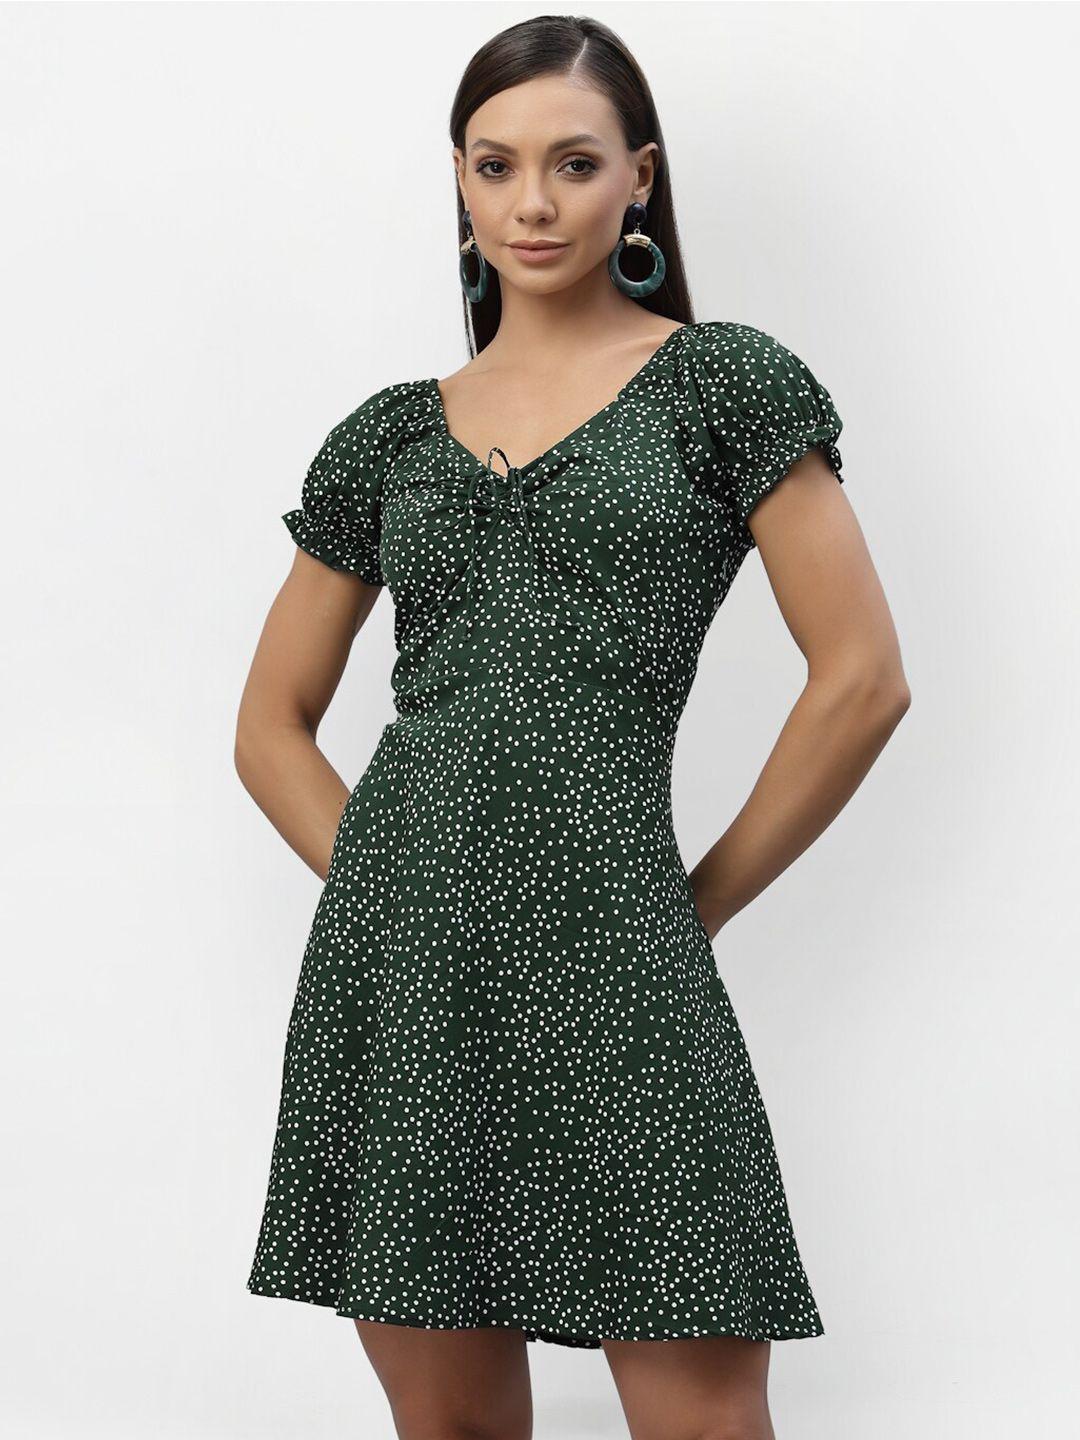 aayu women green polka dots dress